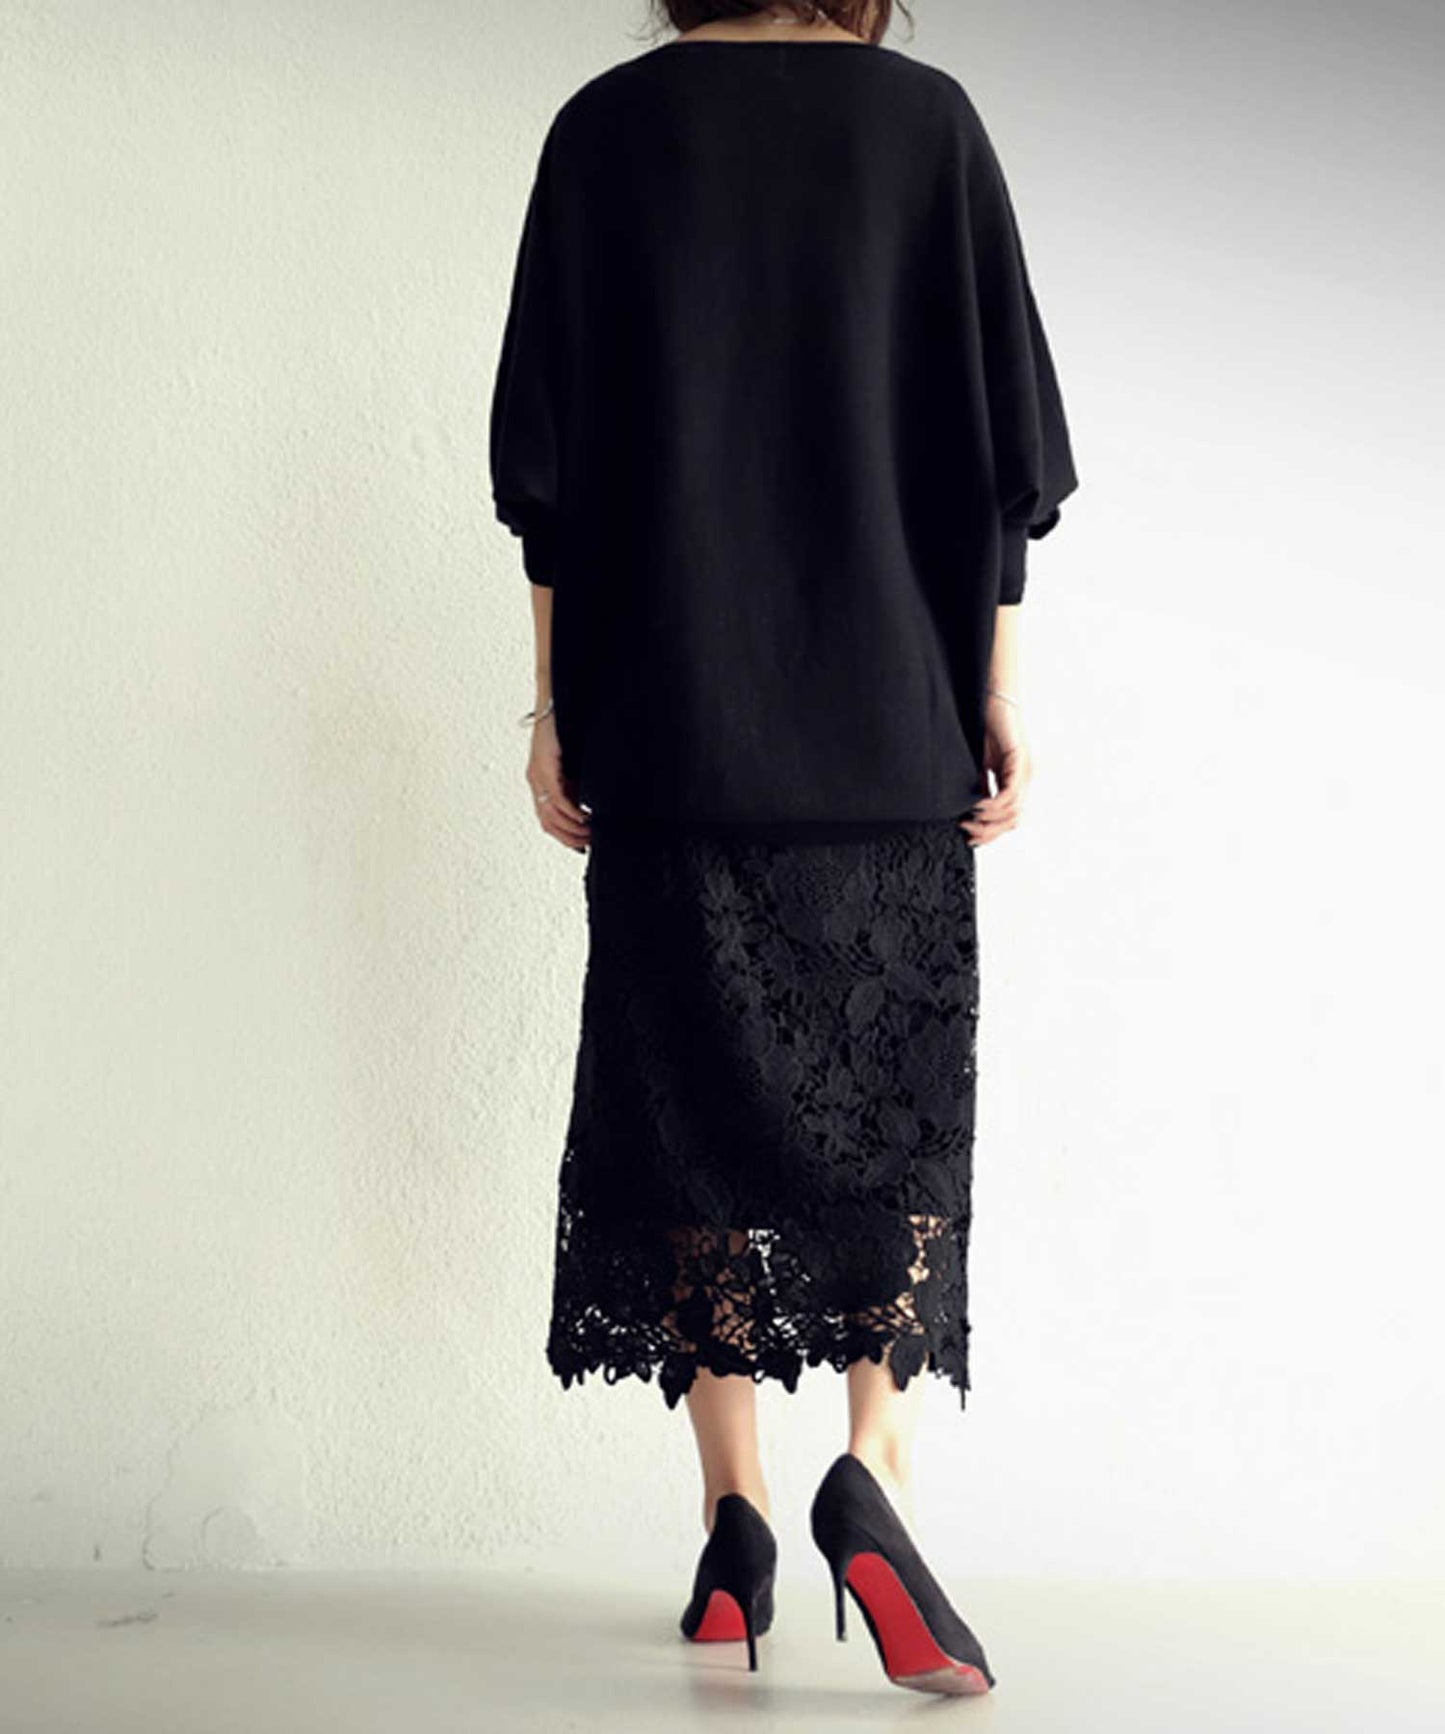 Floral Lace Ladies skirt Midi-length